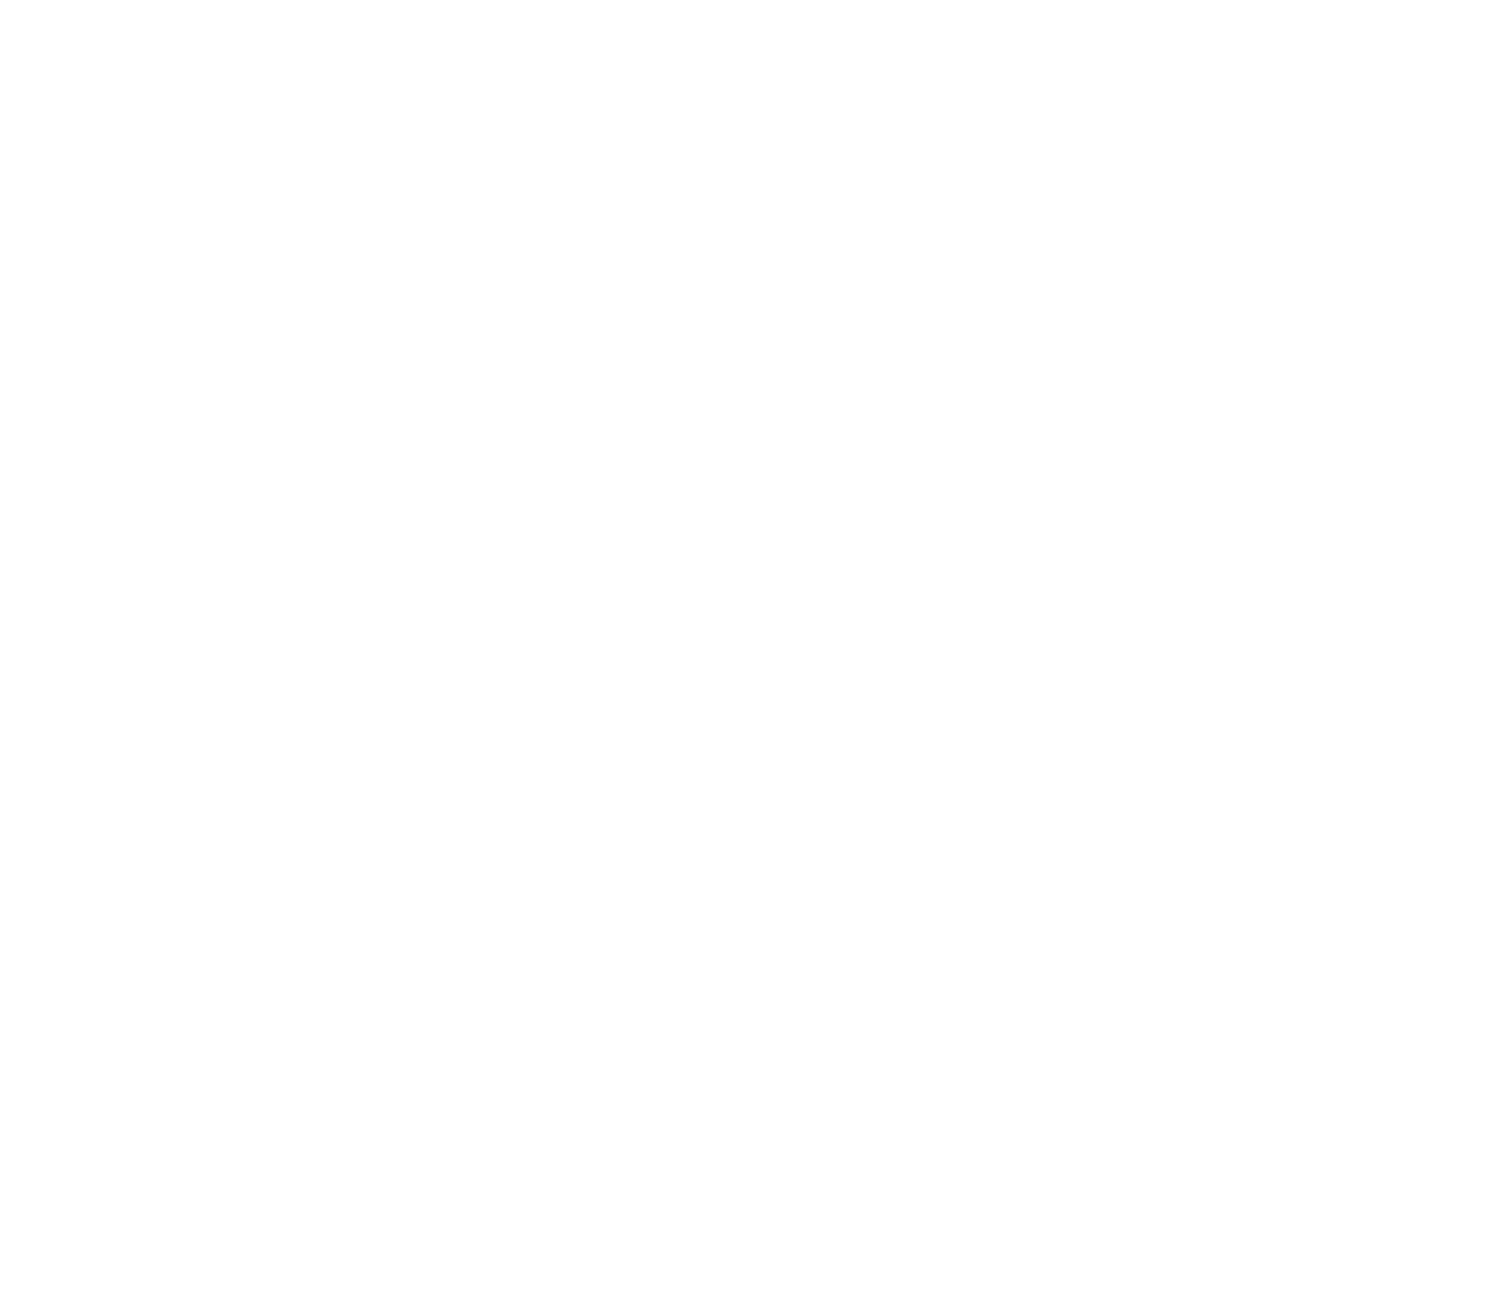 Allgeier logo for dark backgrounds (transparent PNG)